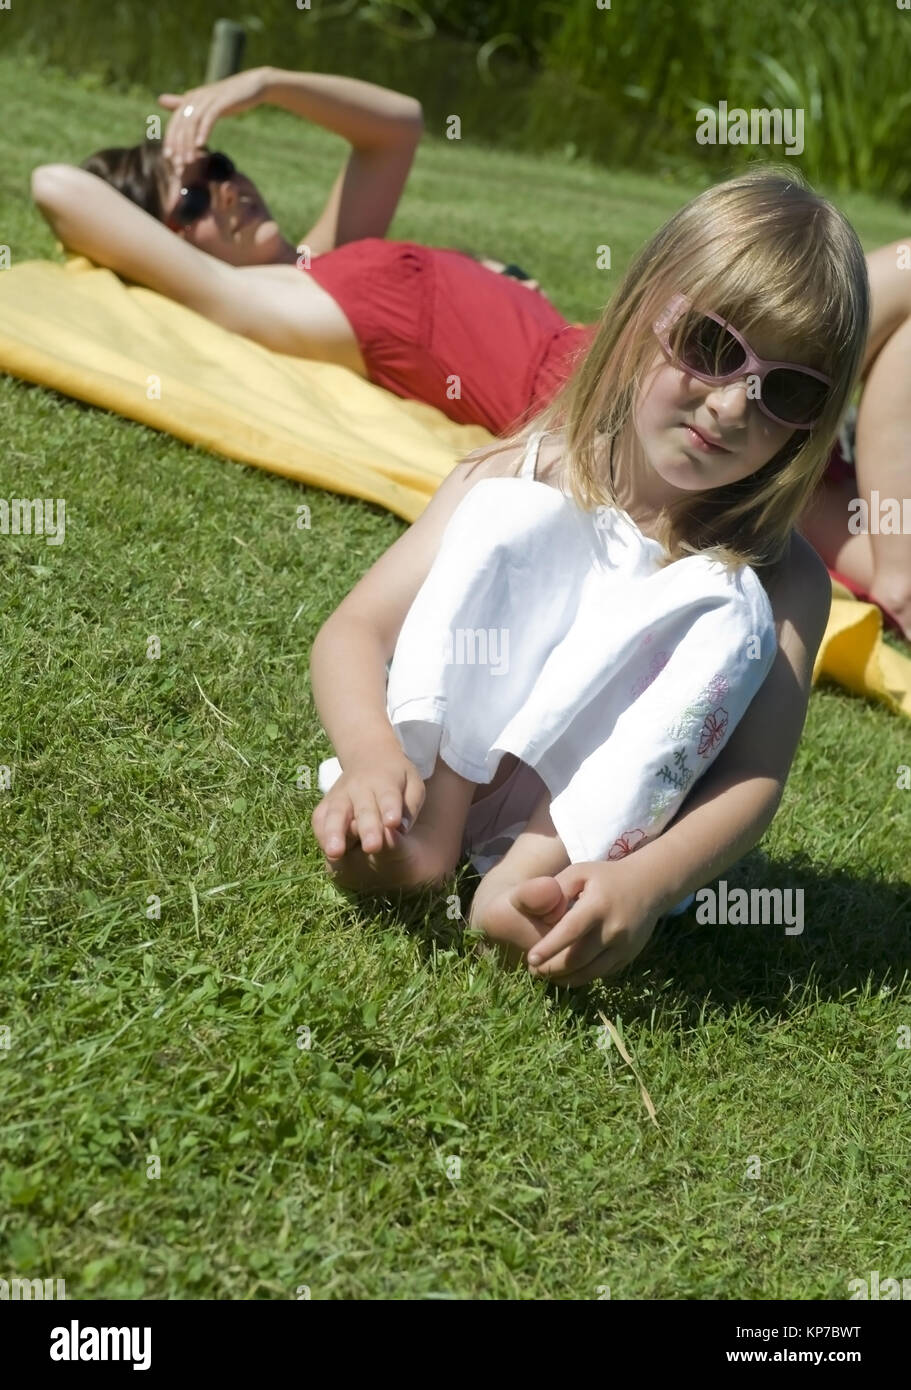 Model release, Mutter mit Kindern an einem sonnigen Tag in der Wiese - mother with children on a sunny day in meadow Stock Photo